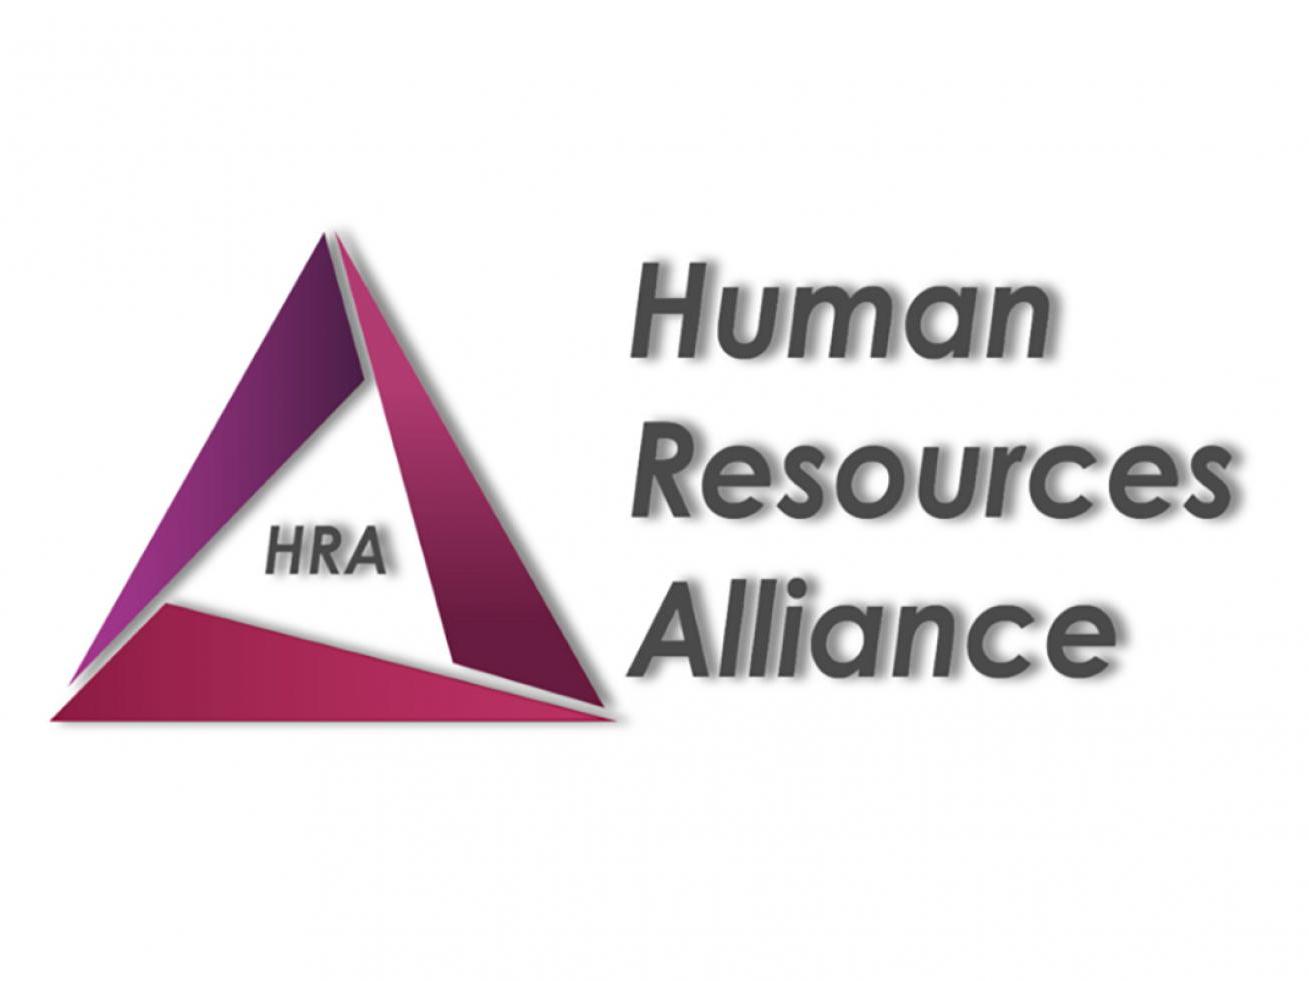 Human Resources Alliance logo